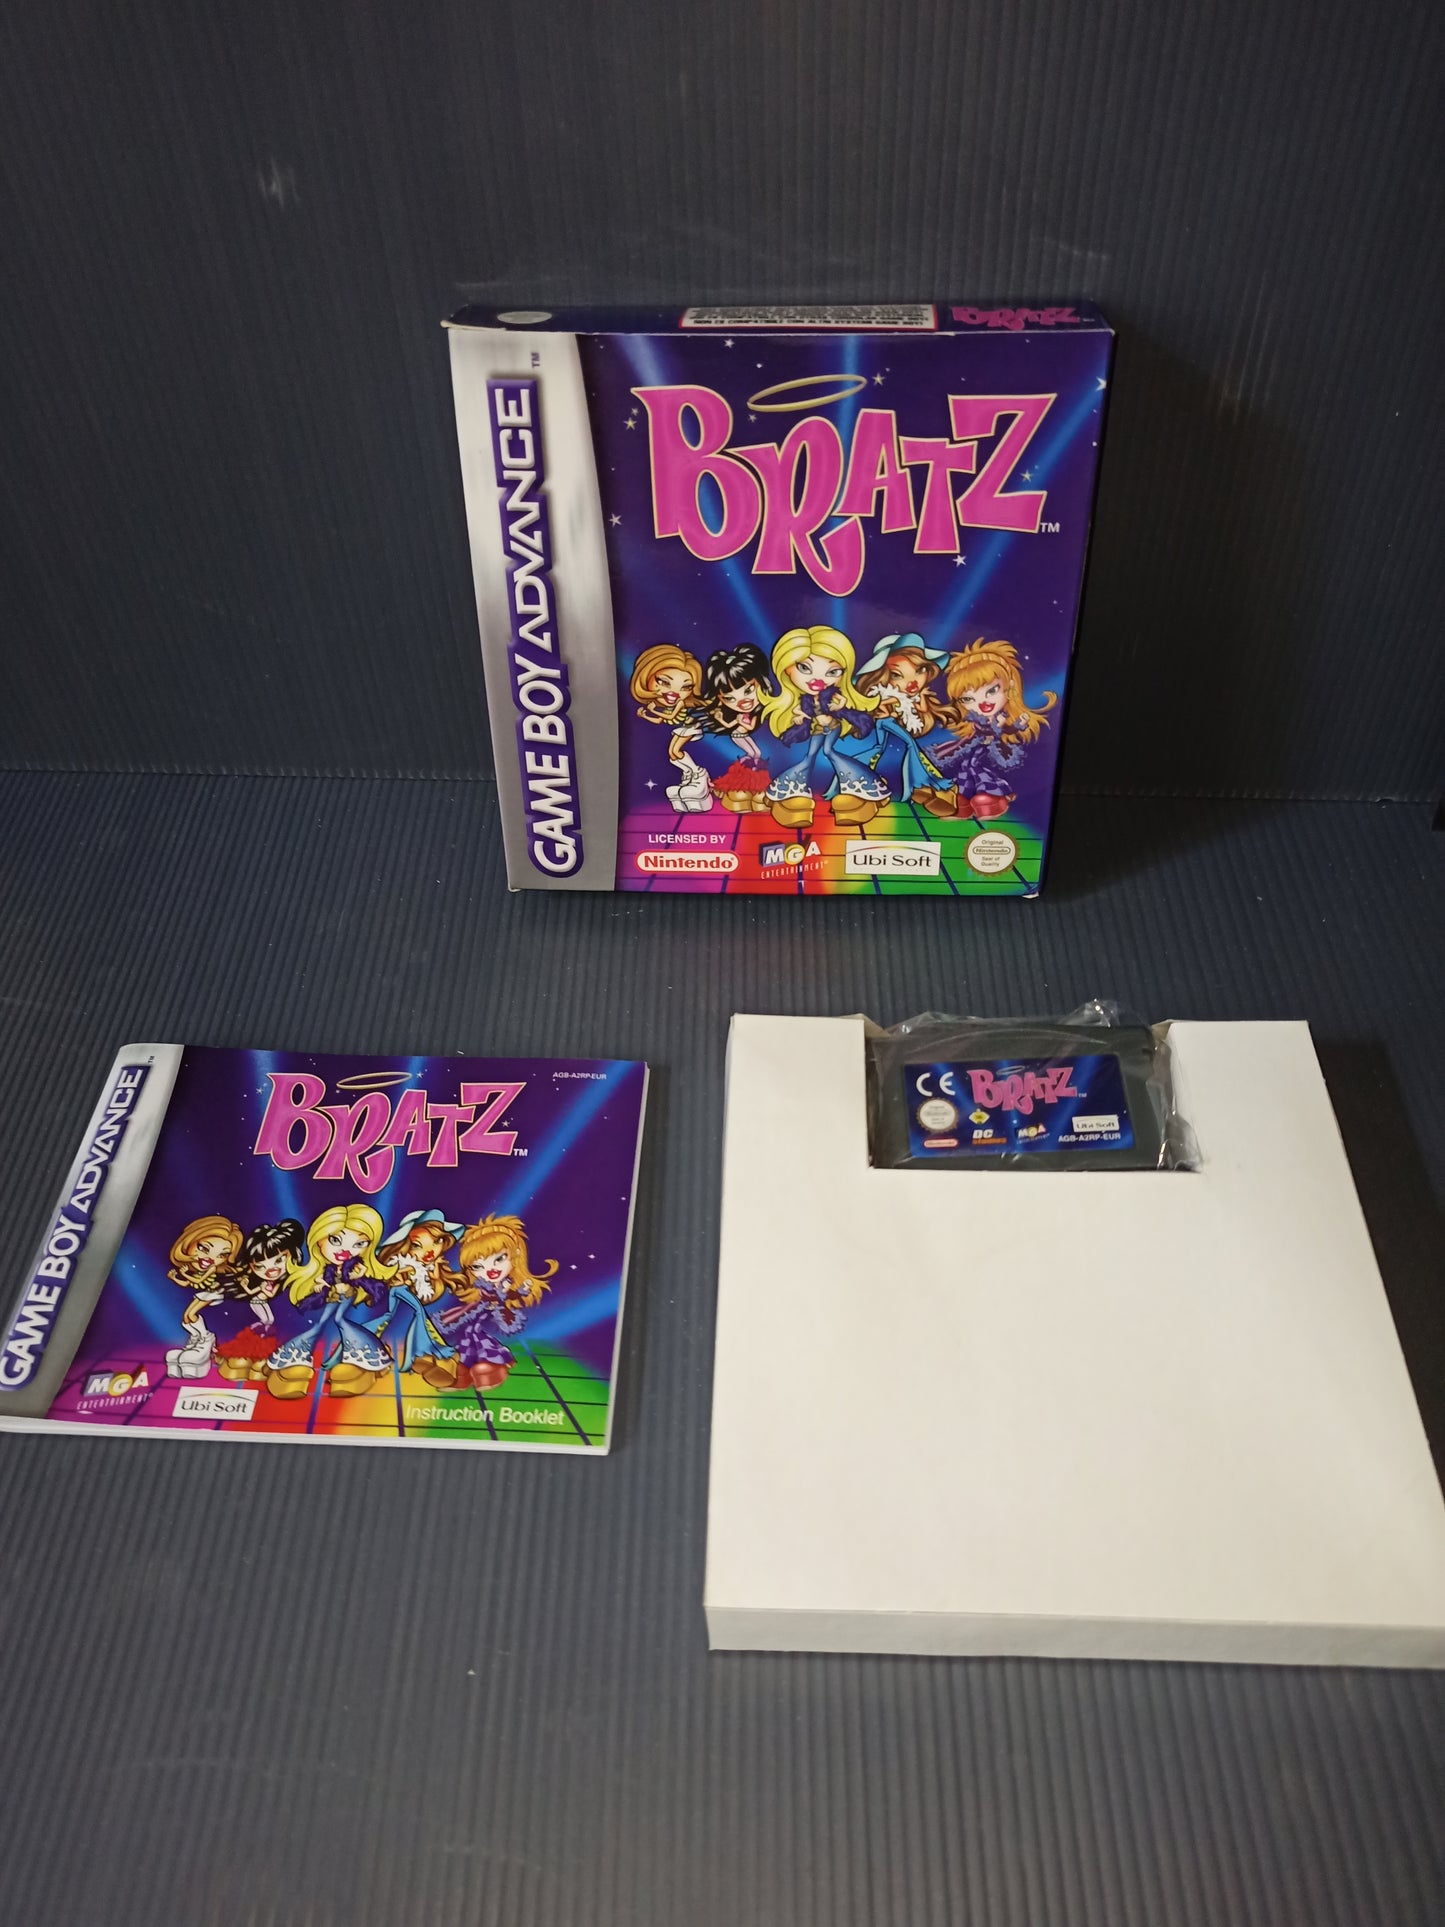 Bratz video game for Game Boy Advance